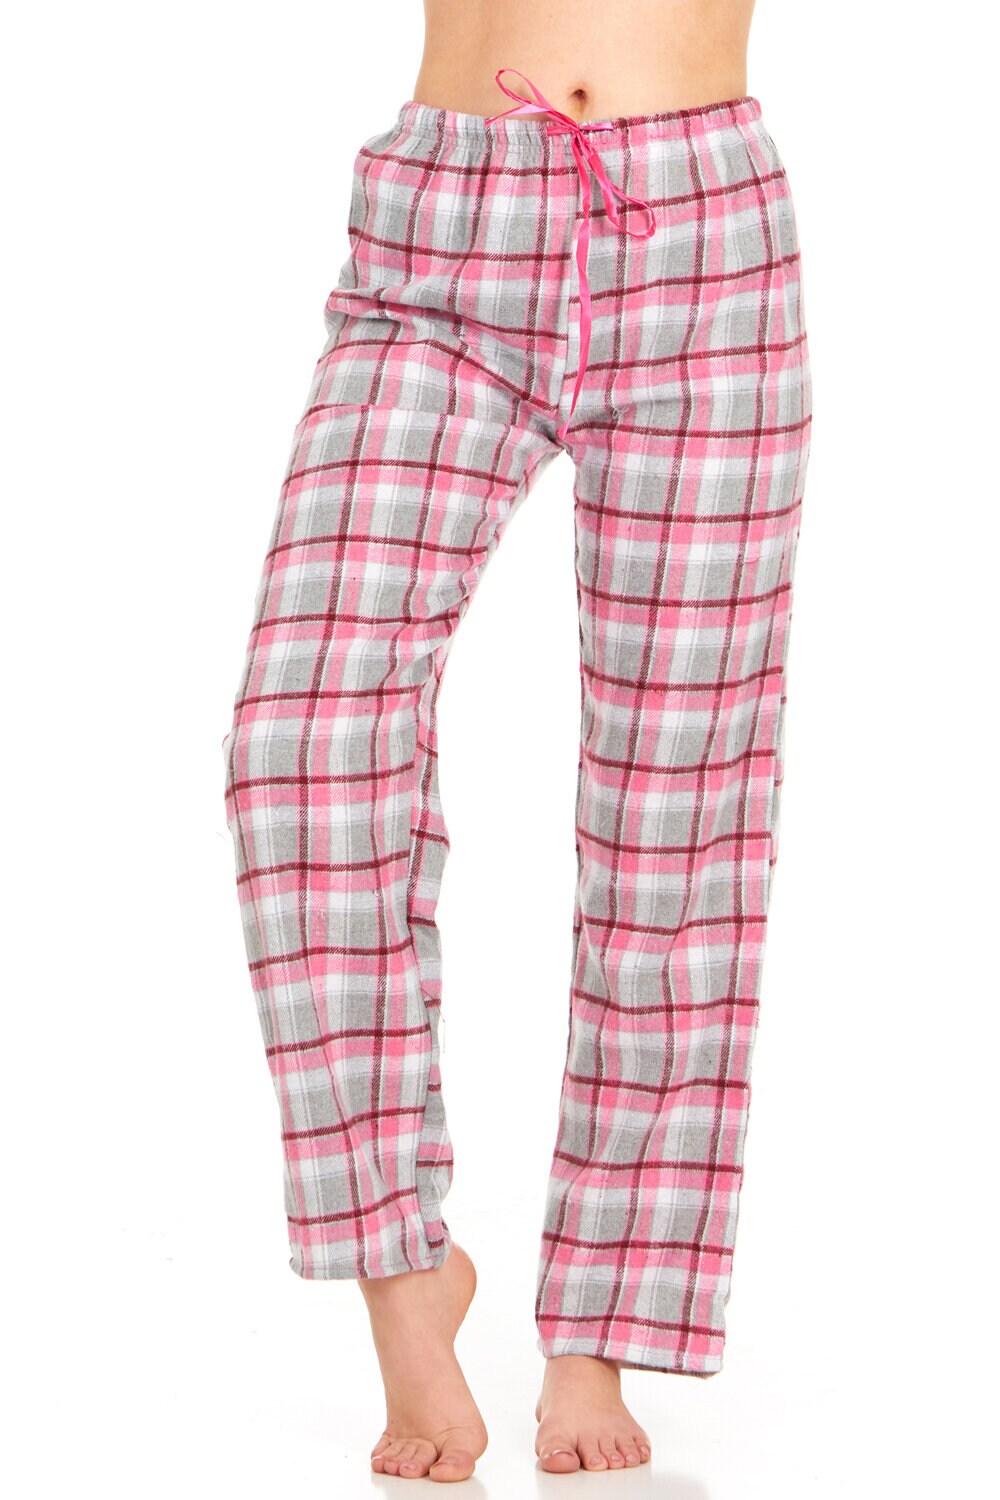 Daresay Women's Flannel Soft Stretchy Plaid Long Sleep Pajama